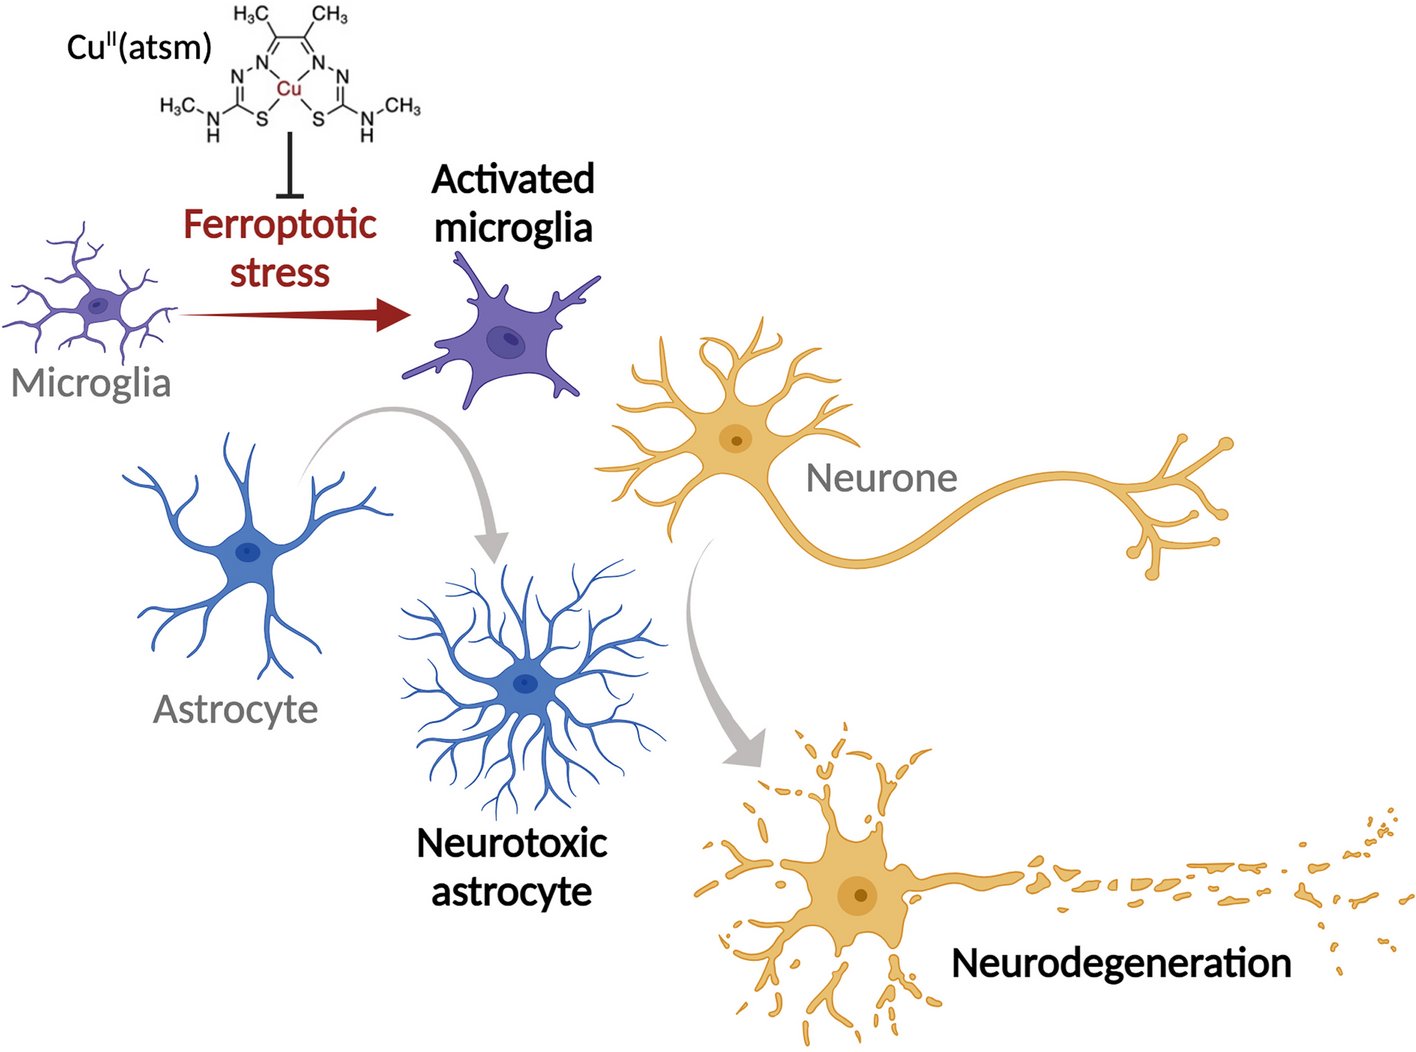 Microglial ferroptotic stress causes non-cell autonomous neuronal death